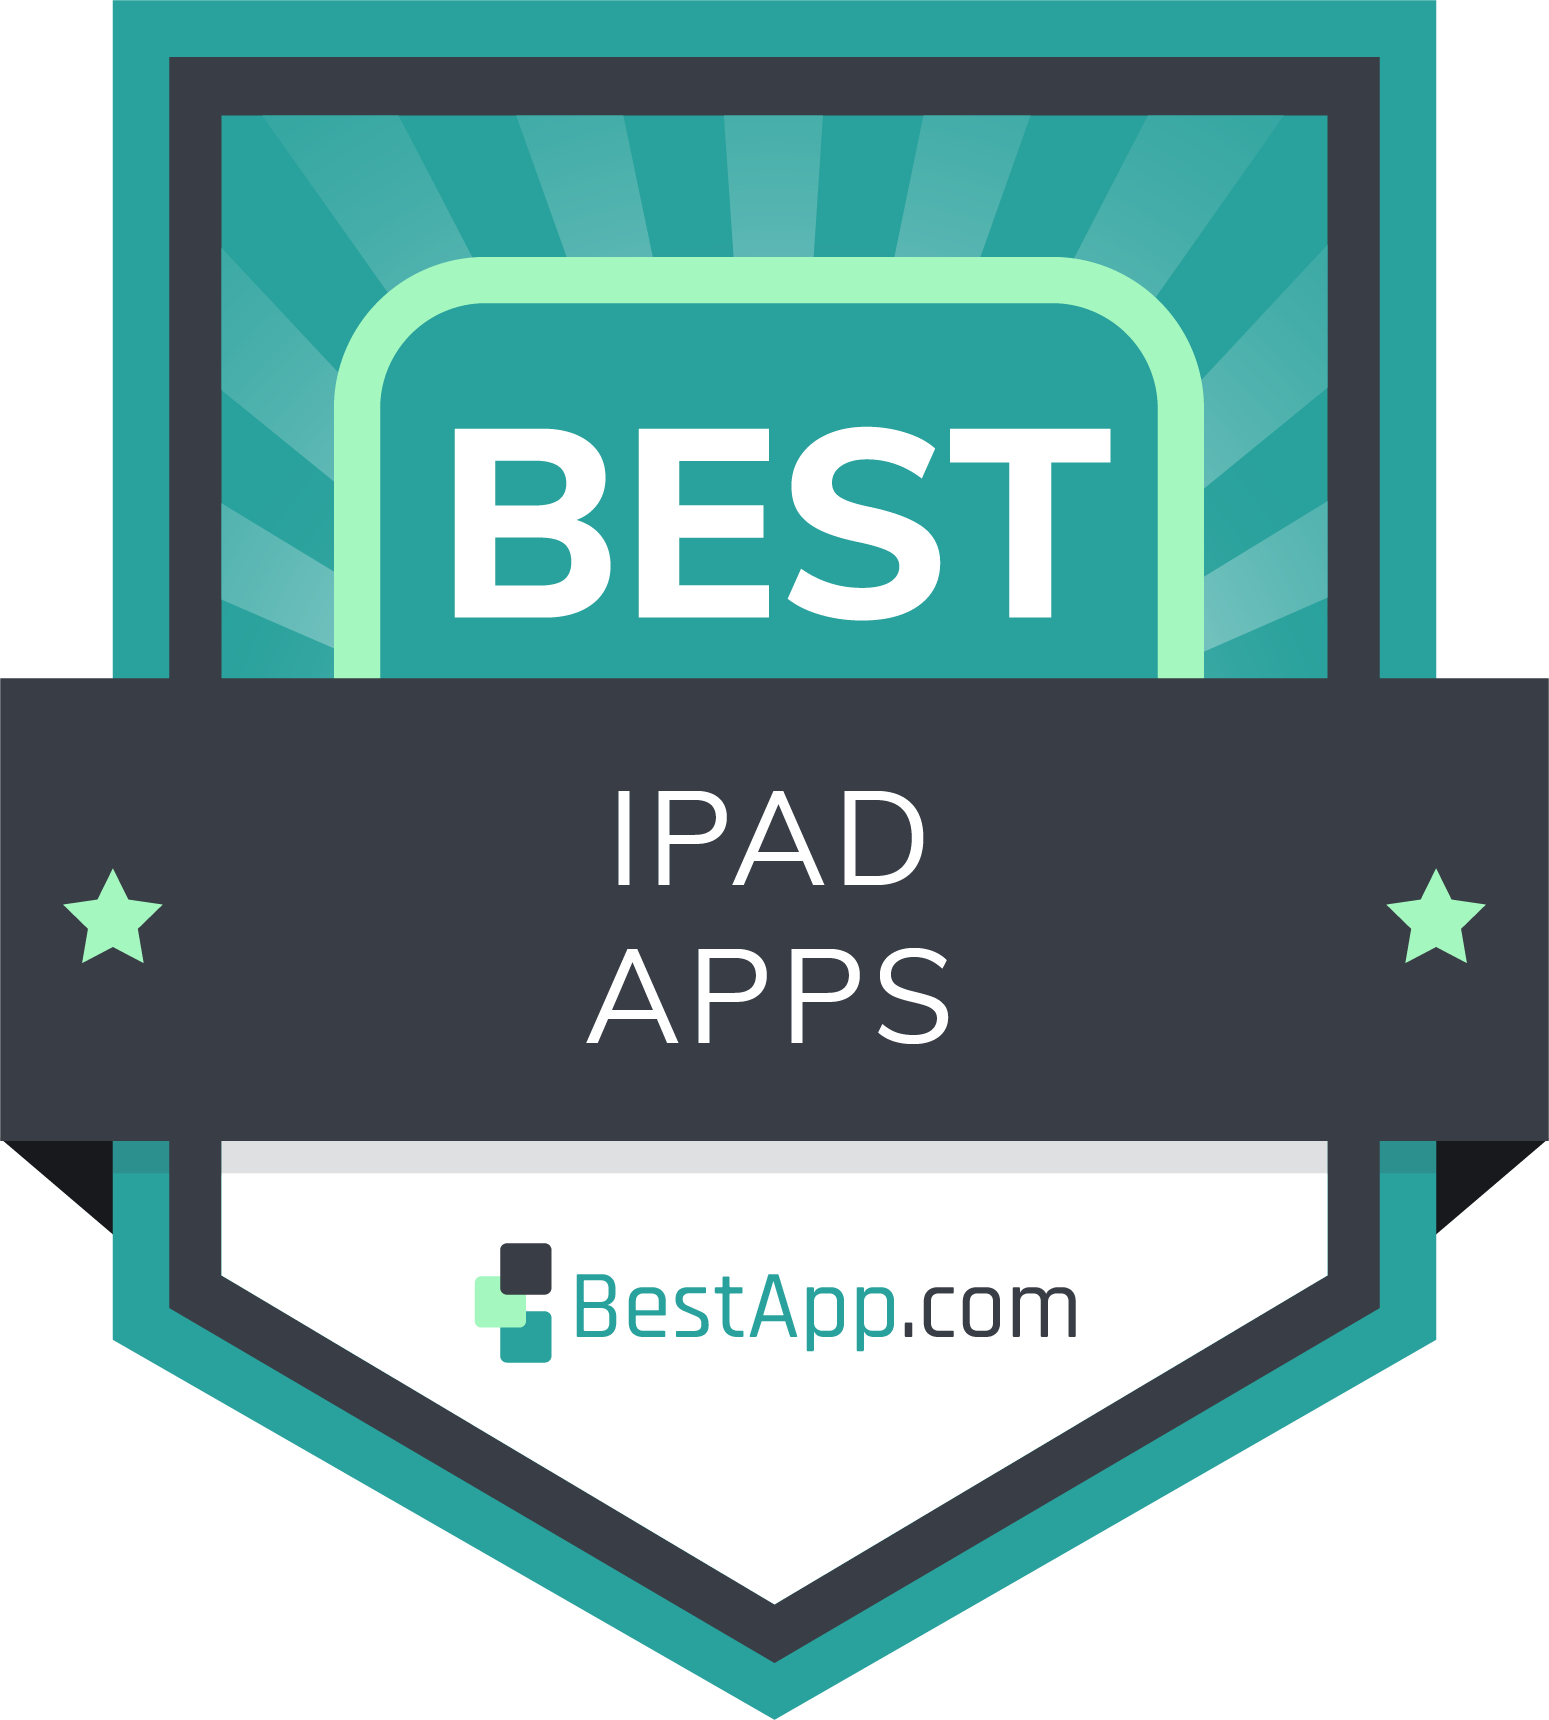 Best iPad Apps Badge